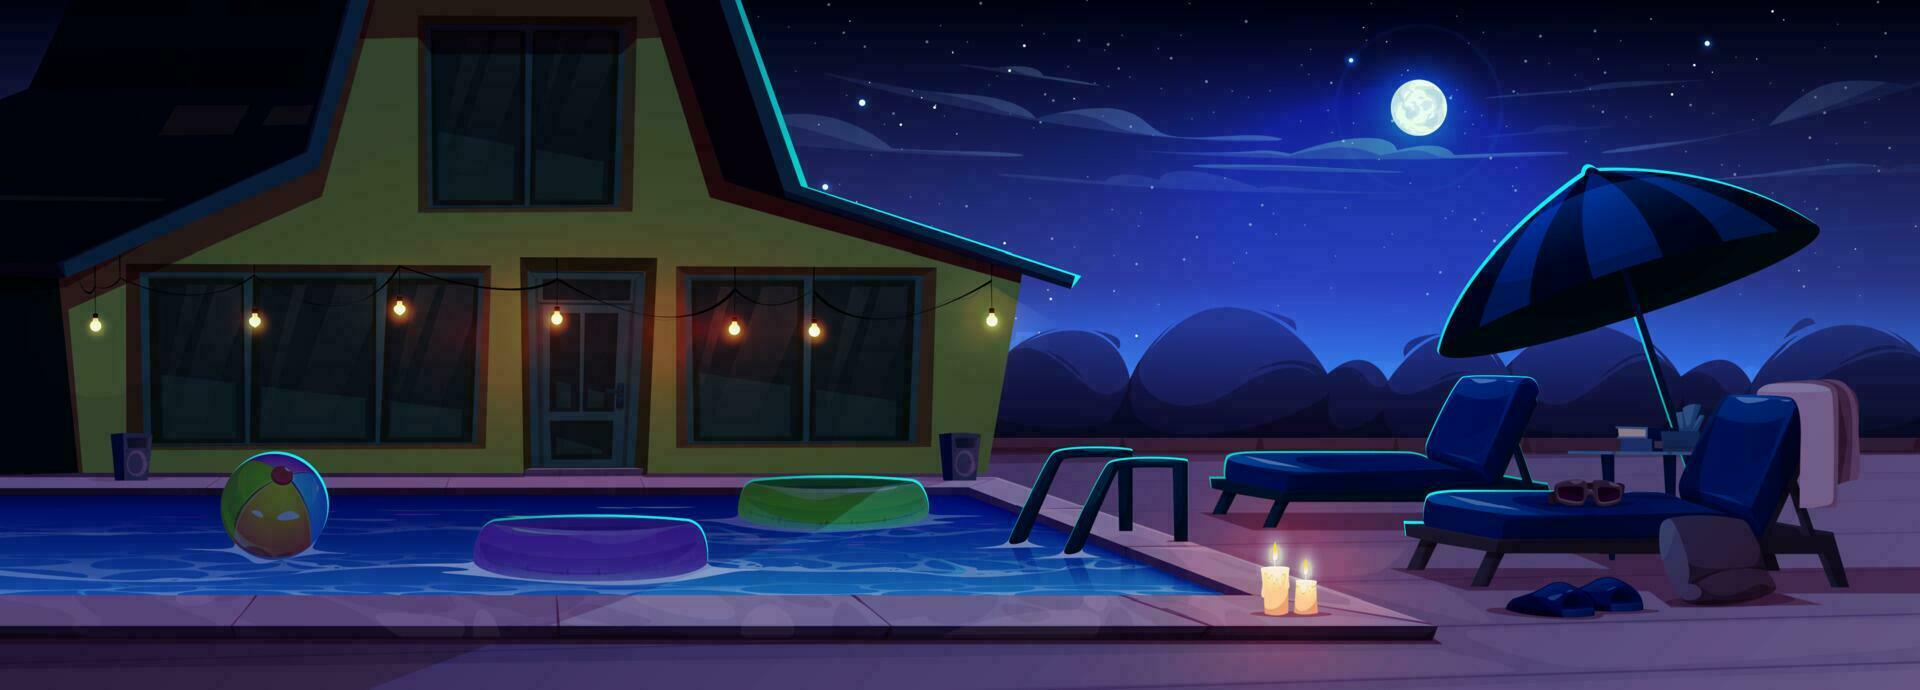 dibujos animados playa casa con nadando piscina a noche vector